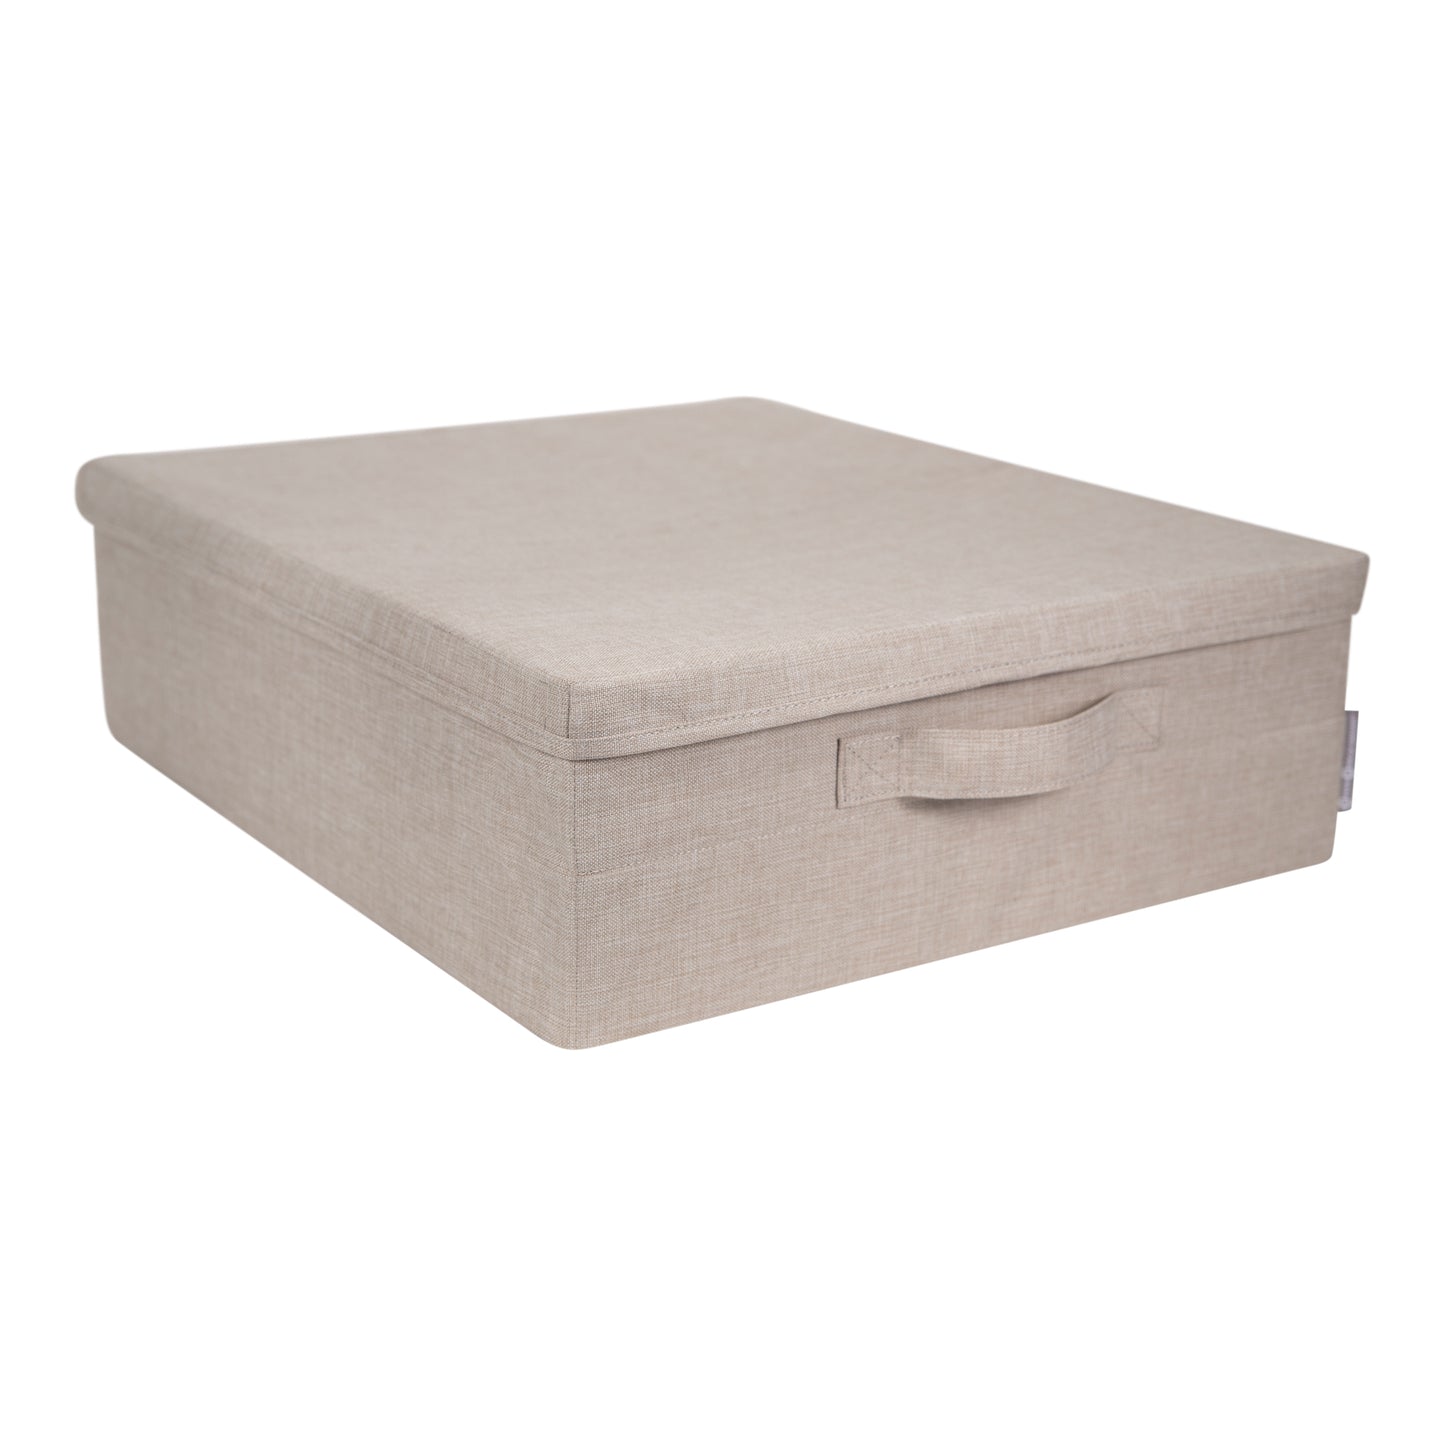 Bigso Soft Underbed Storage Box | Under Bed Storage Containers | 18.1” x 21.7” x 6.3”